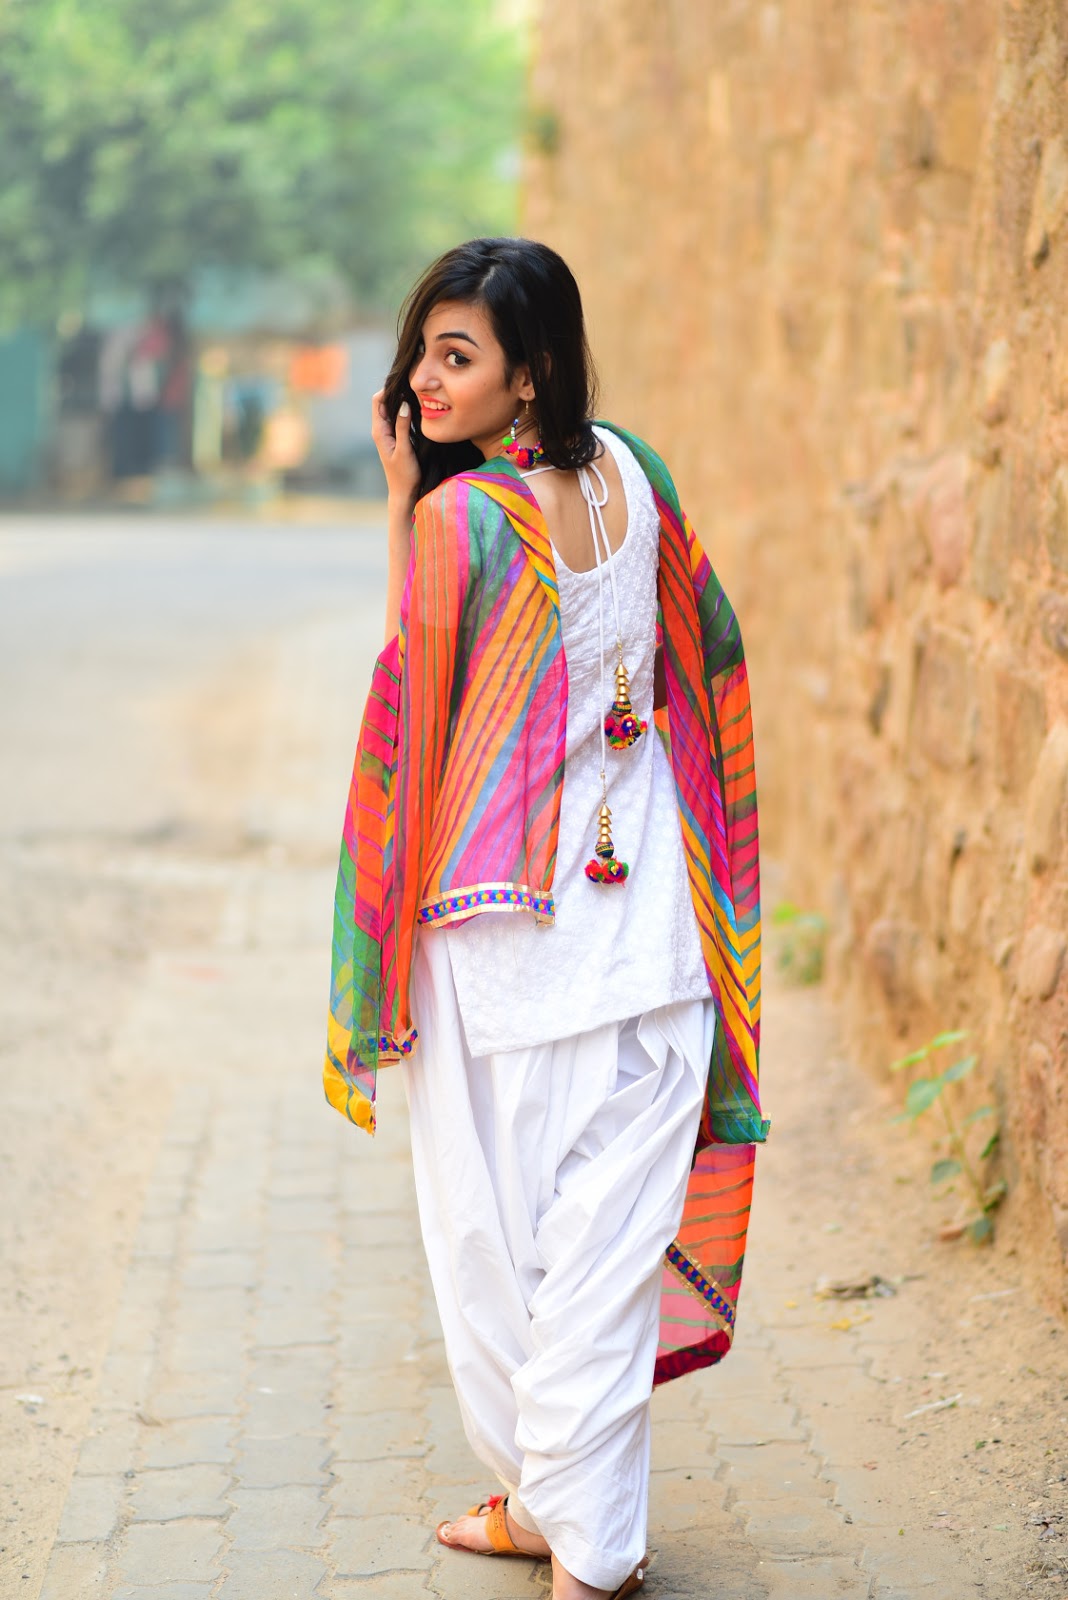 Download Most Beautiful Punjabi Girls In Salwar Kameez Suit White Suit With Colourful Dupatta